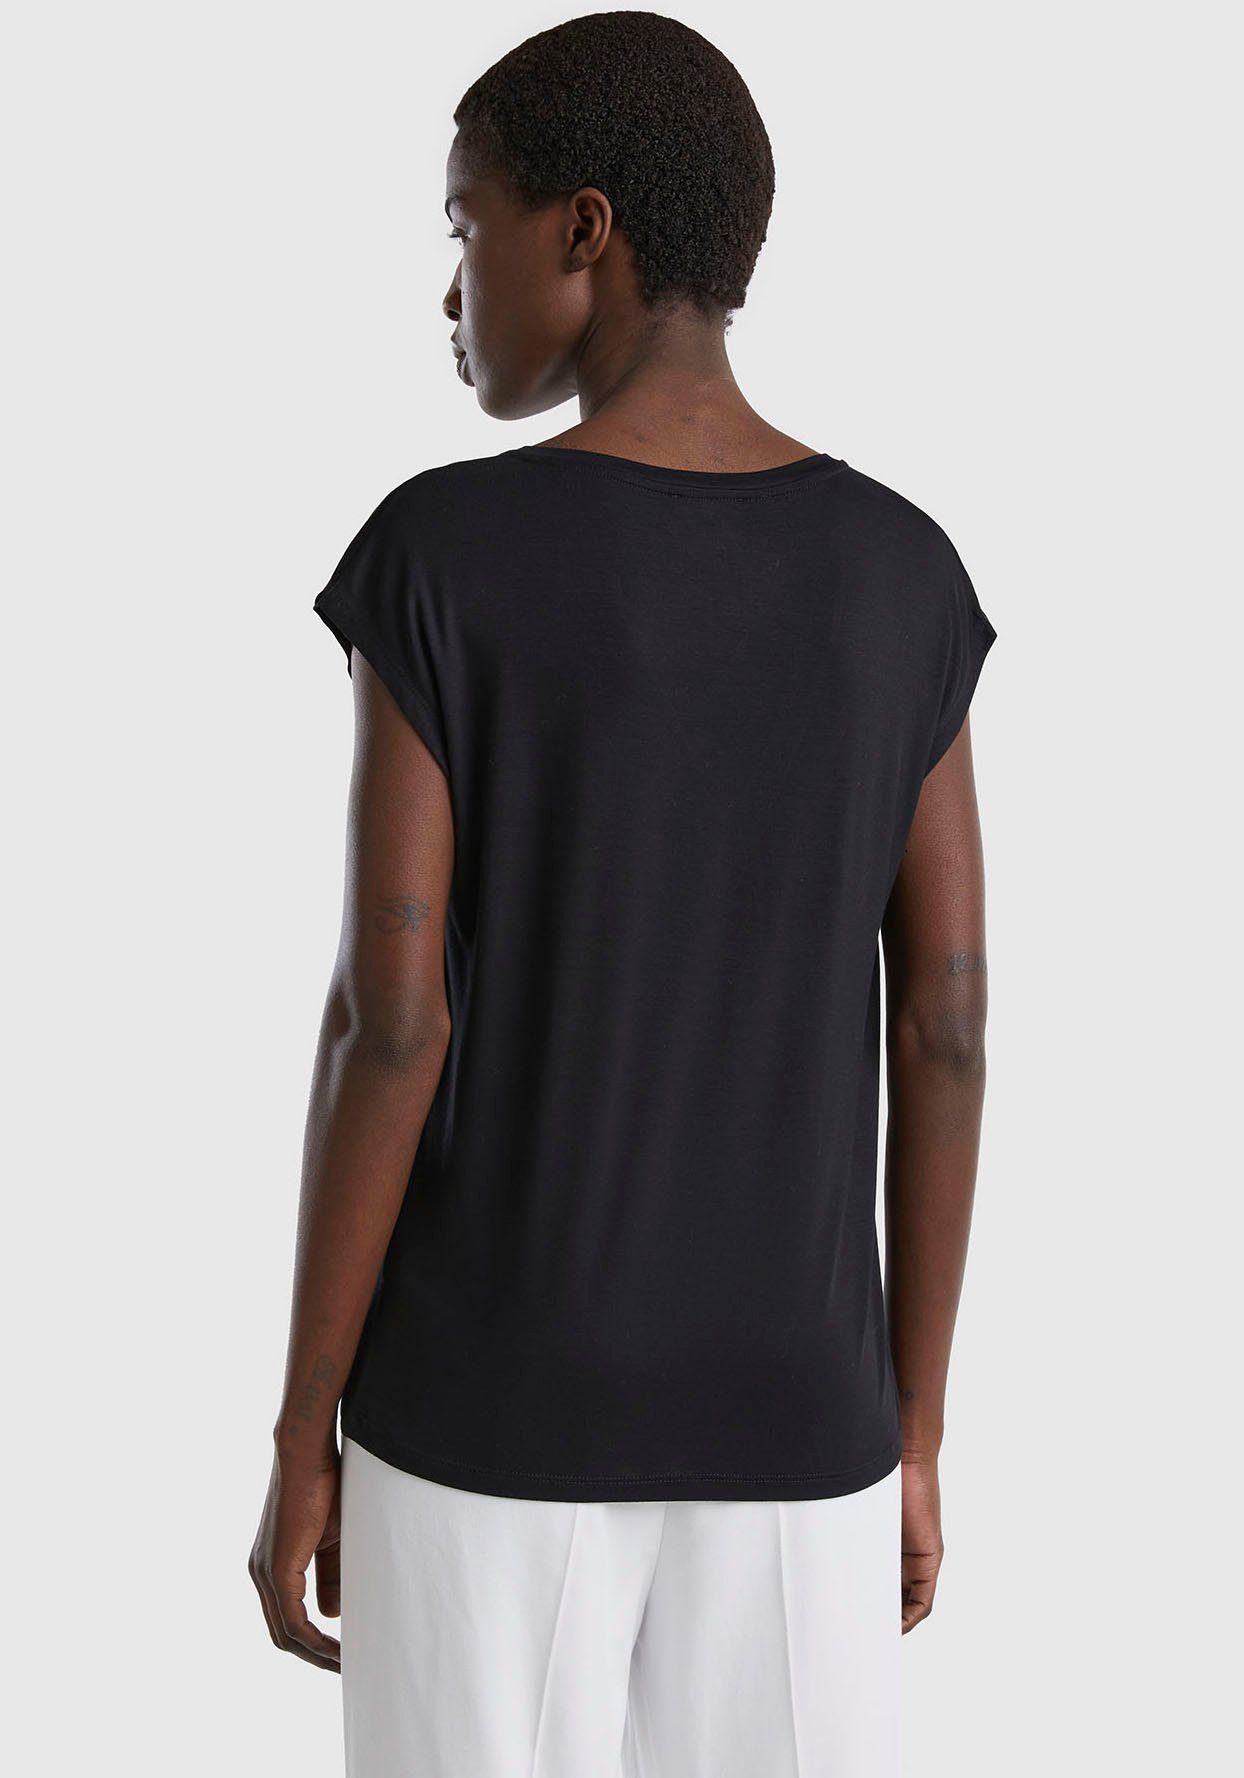 of lässiger schwarz Colors Benetton United T-SHIRT Passform V-Shirt in